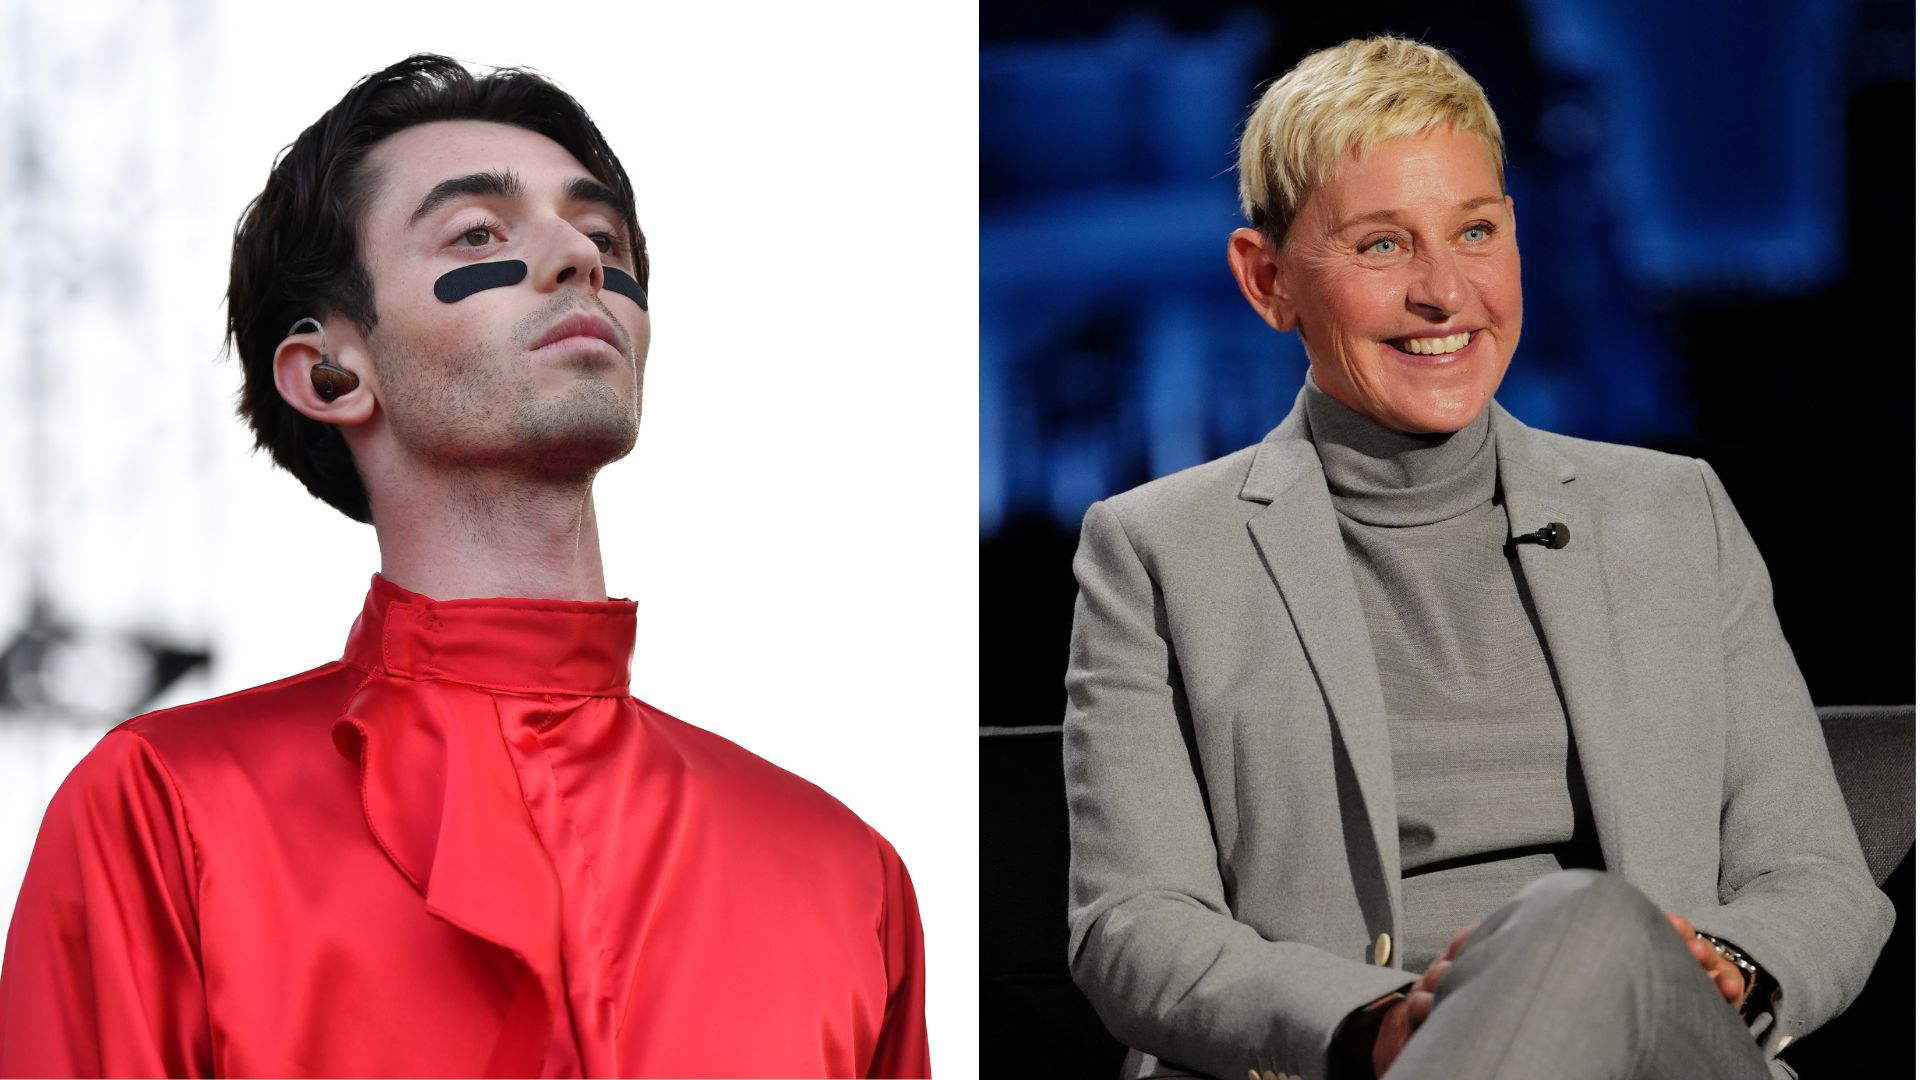 Greyson Chance says Ellen DeGeneres ‘abandoned’ him, calls her ‘manipulative’ and ‘opportunistic’